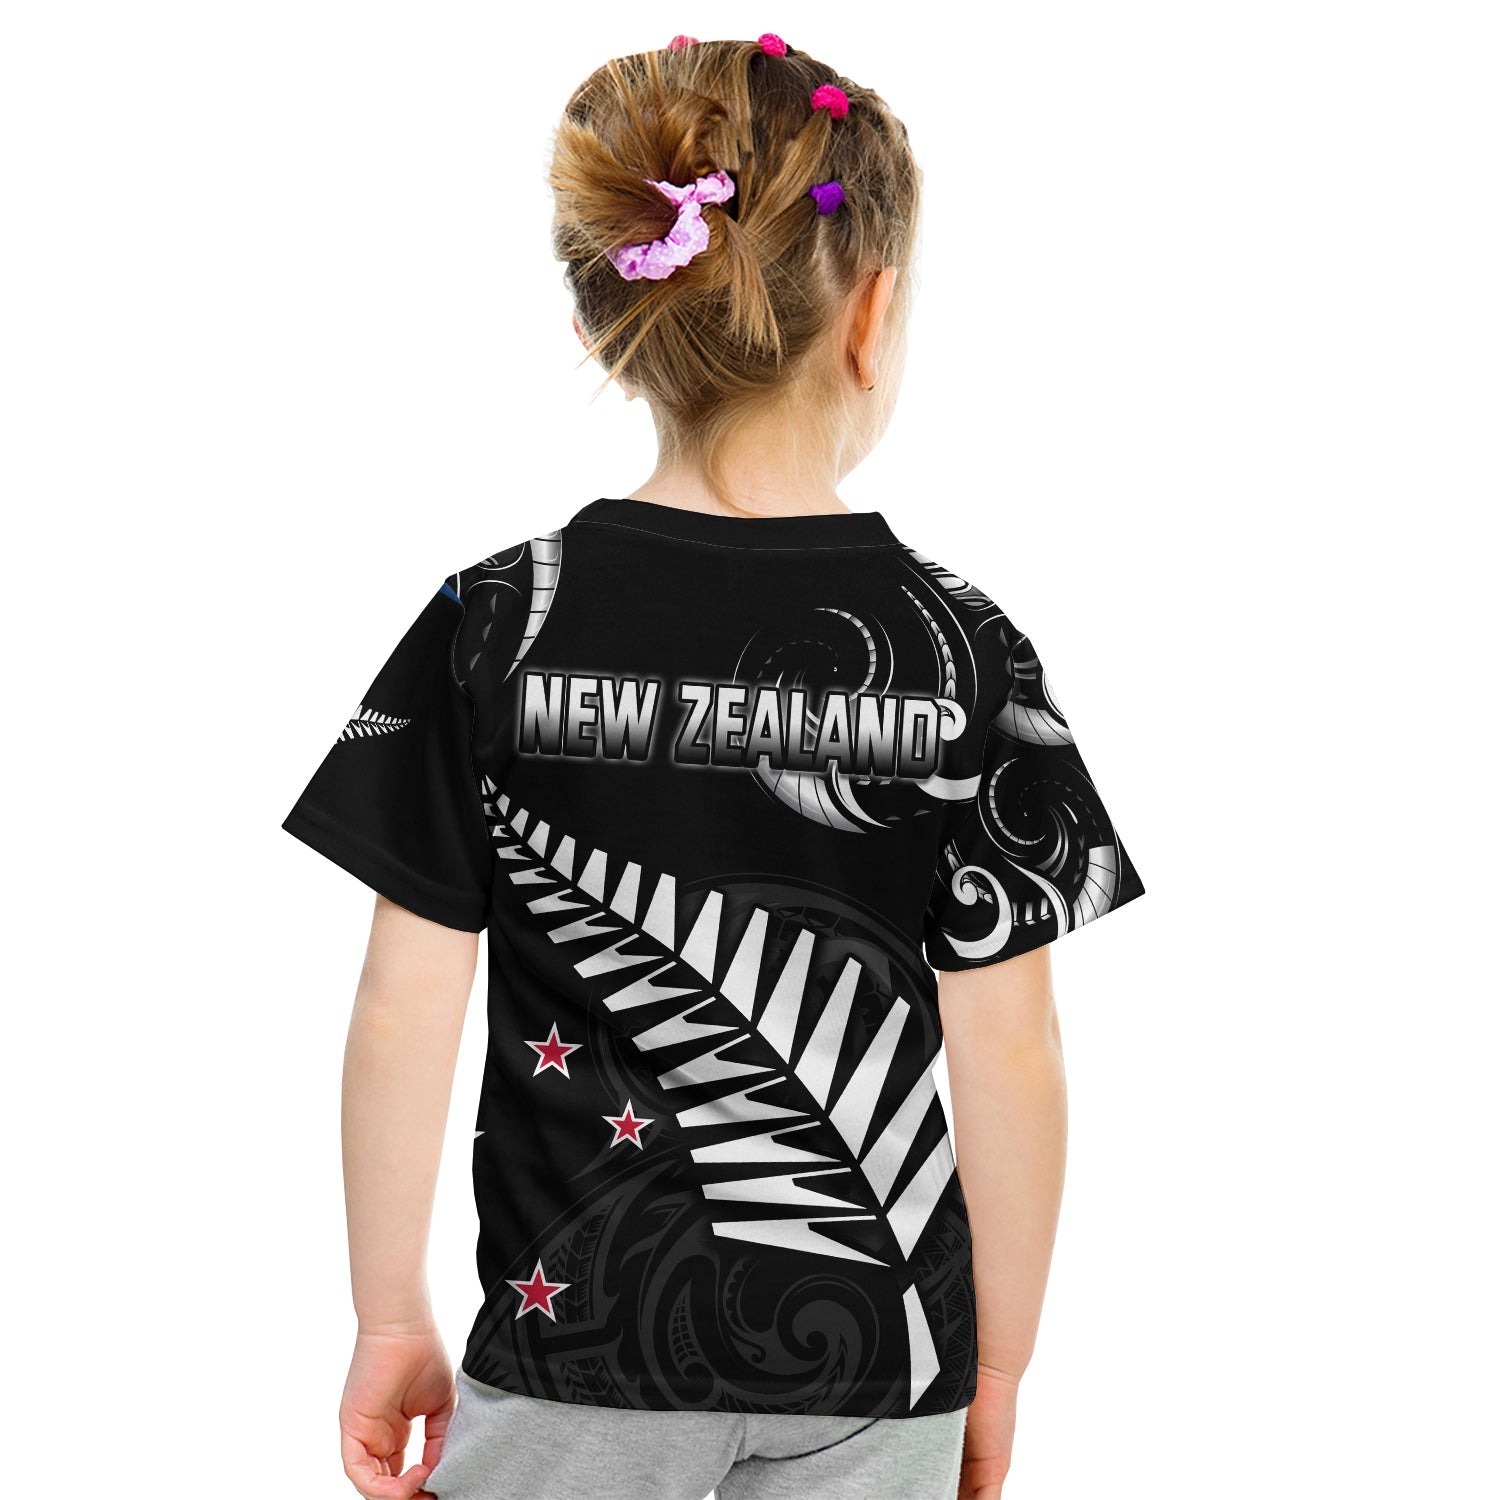 new-zealand-cricket-t-shirt-go-black-cap-champions-mix-maori-kiwis